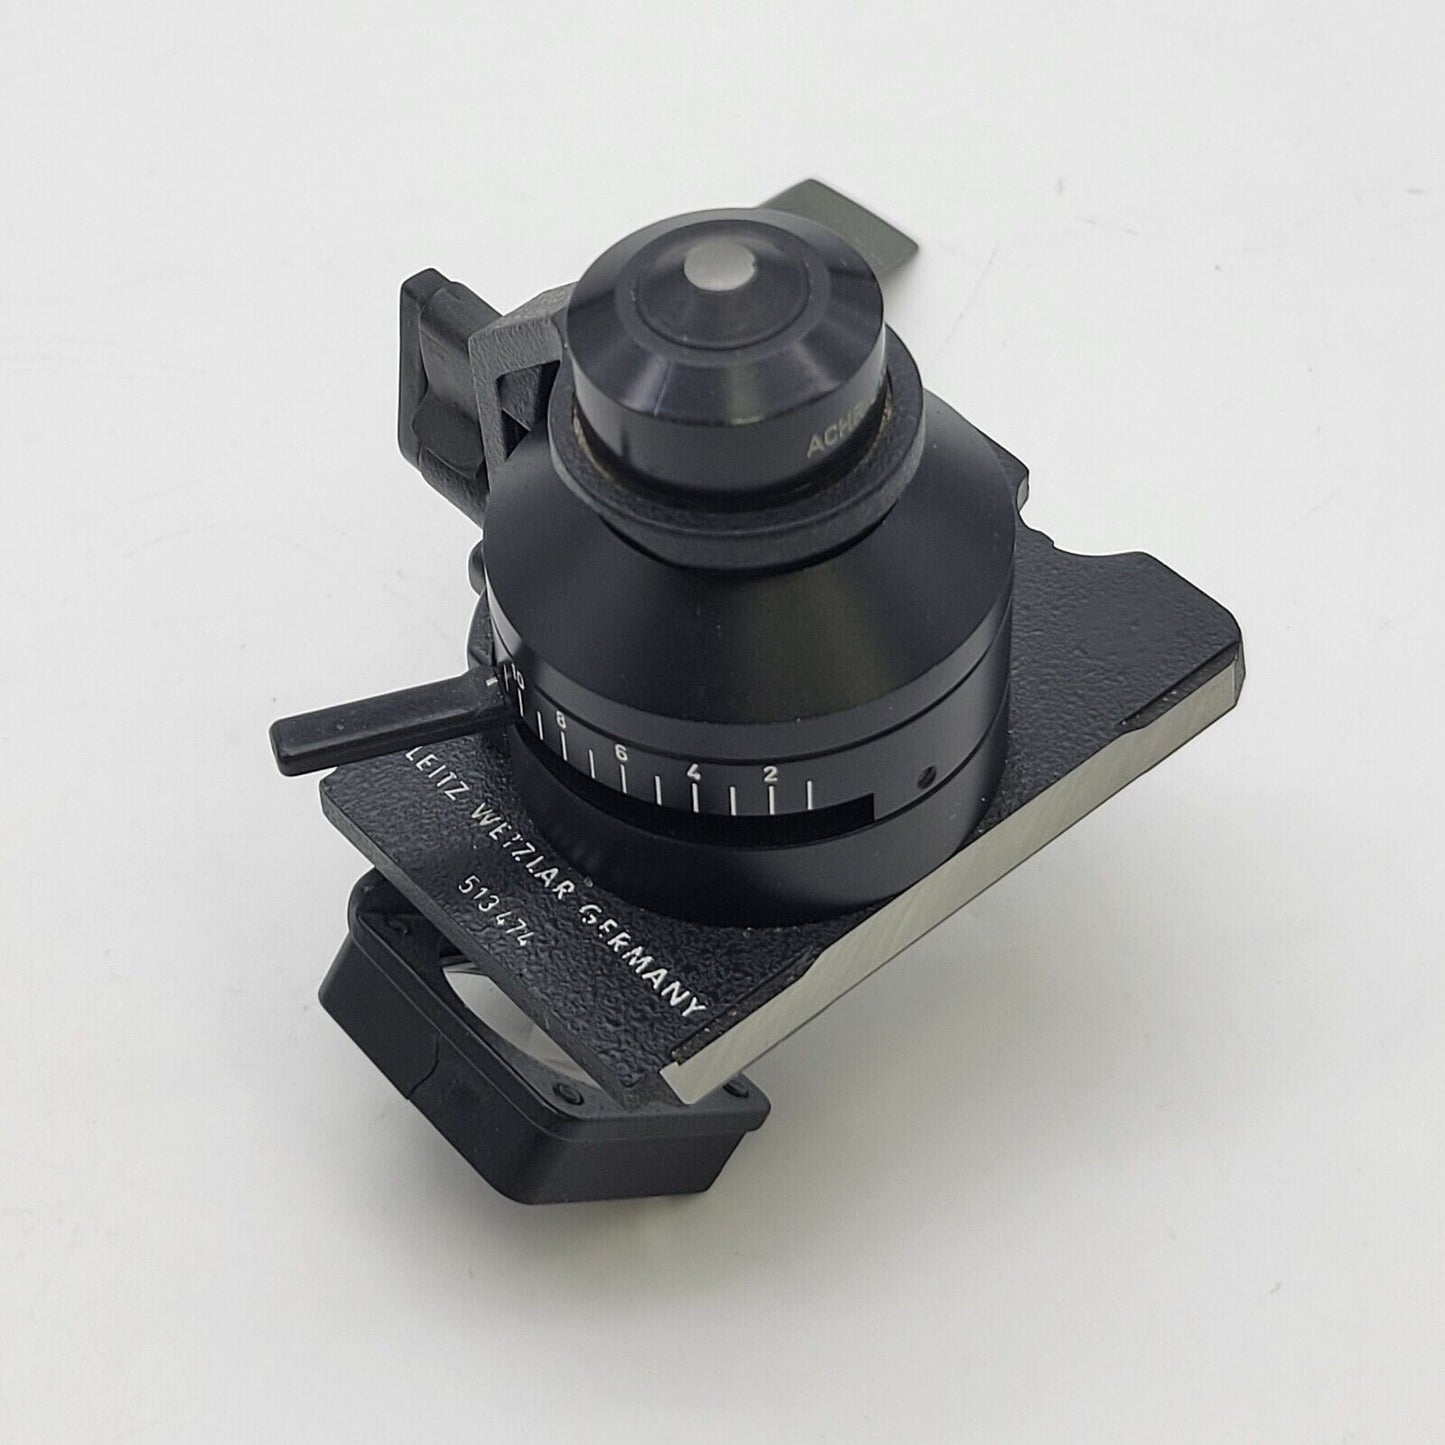 Leitz Microscope Flipout Condenser ACHR 0.90 S1.1  513474  Dialux - microscopemarketplace